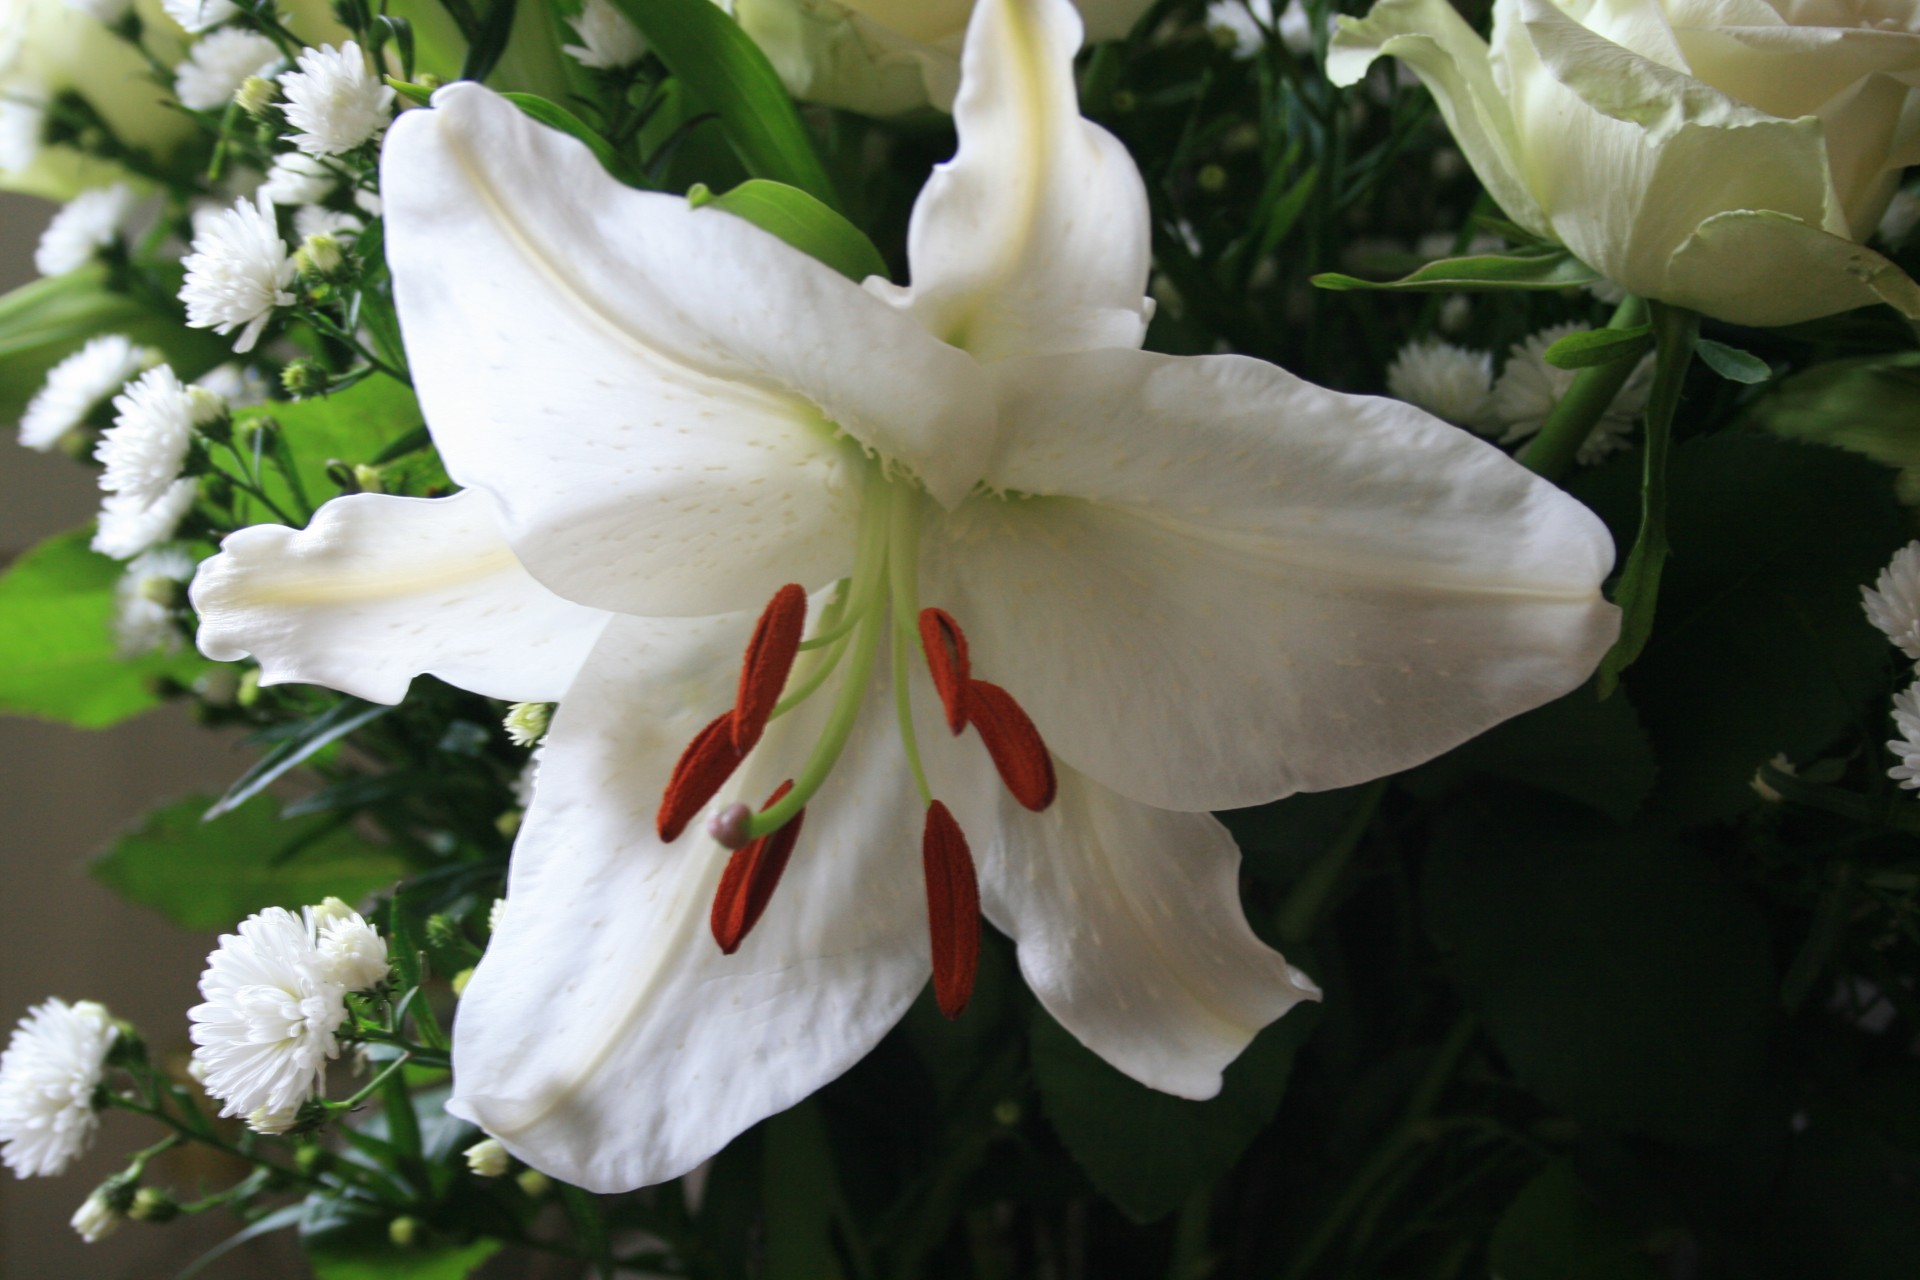 File:Lilium candidum 'Madonna lily' (Liliaceae) flower.JPG - Wikimedia Commons